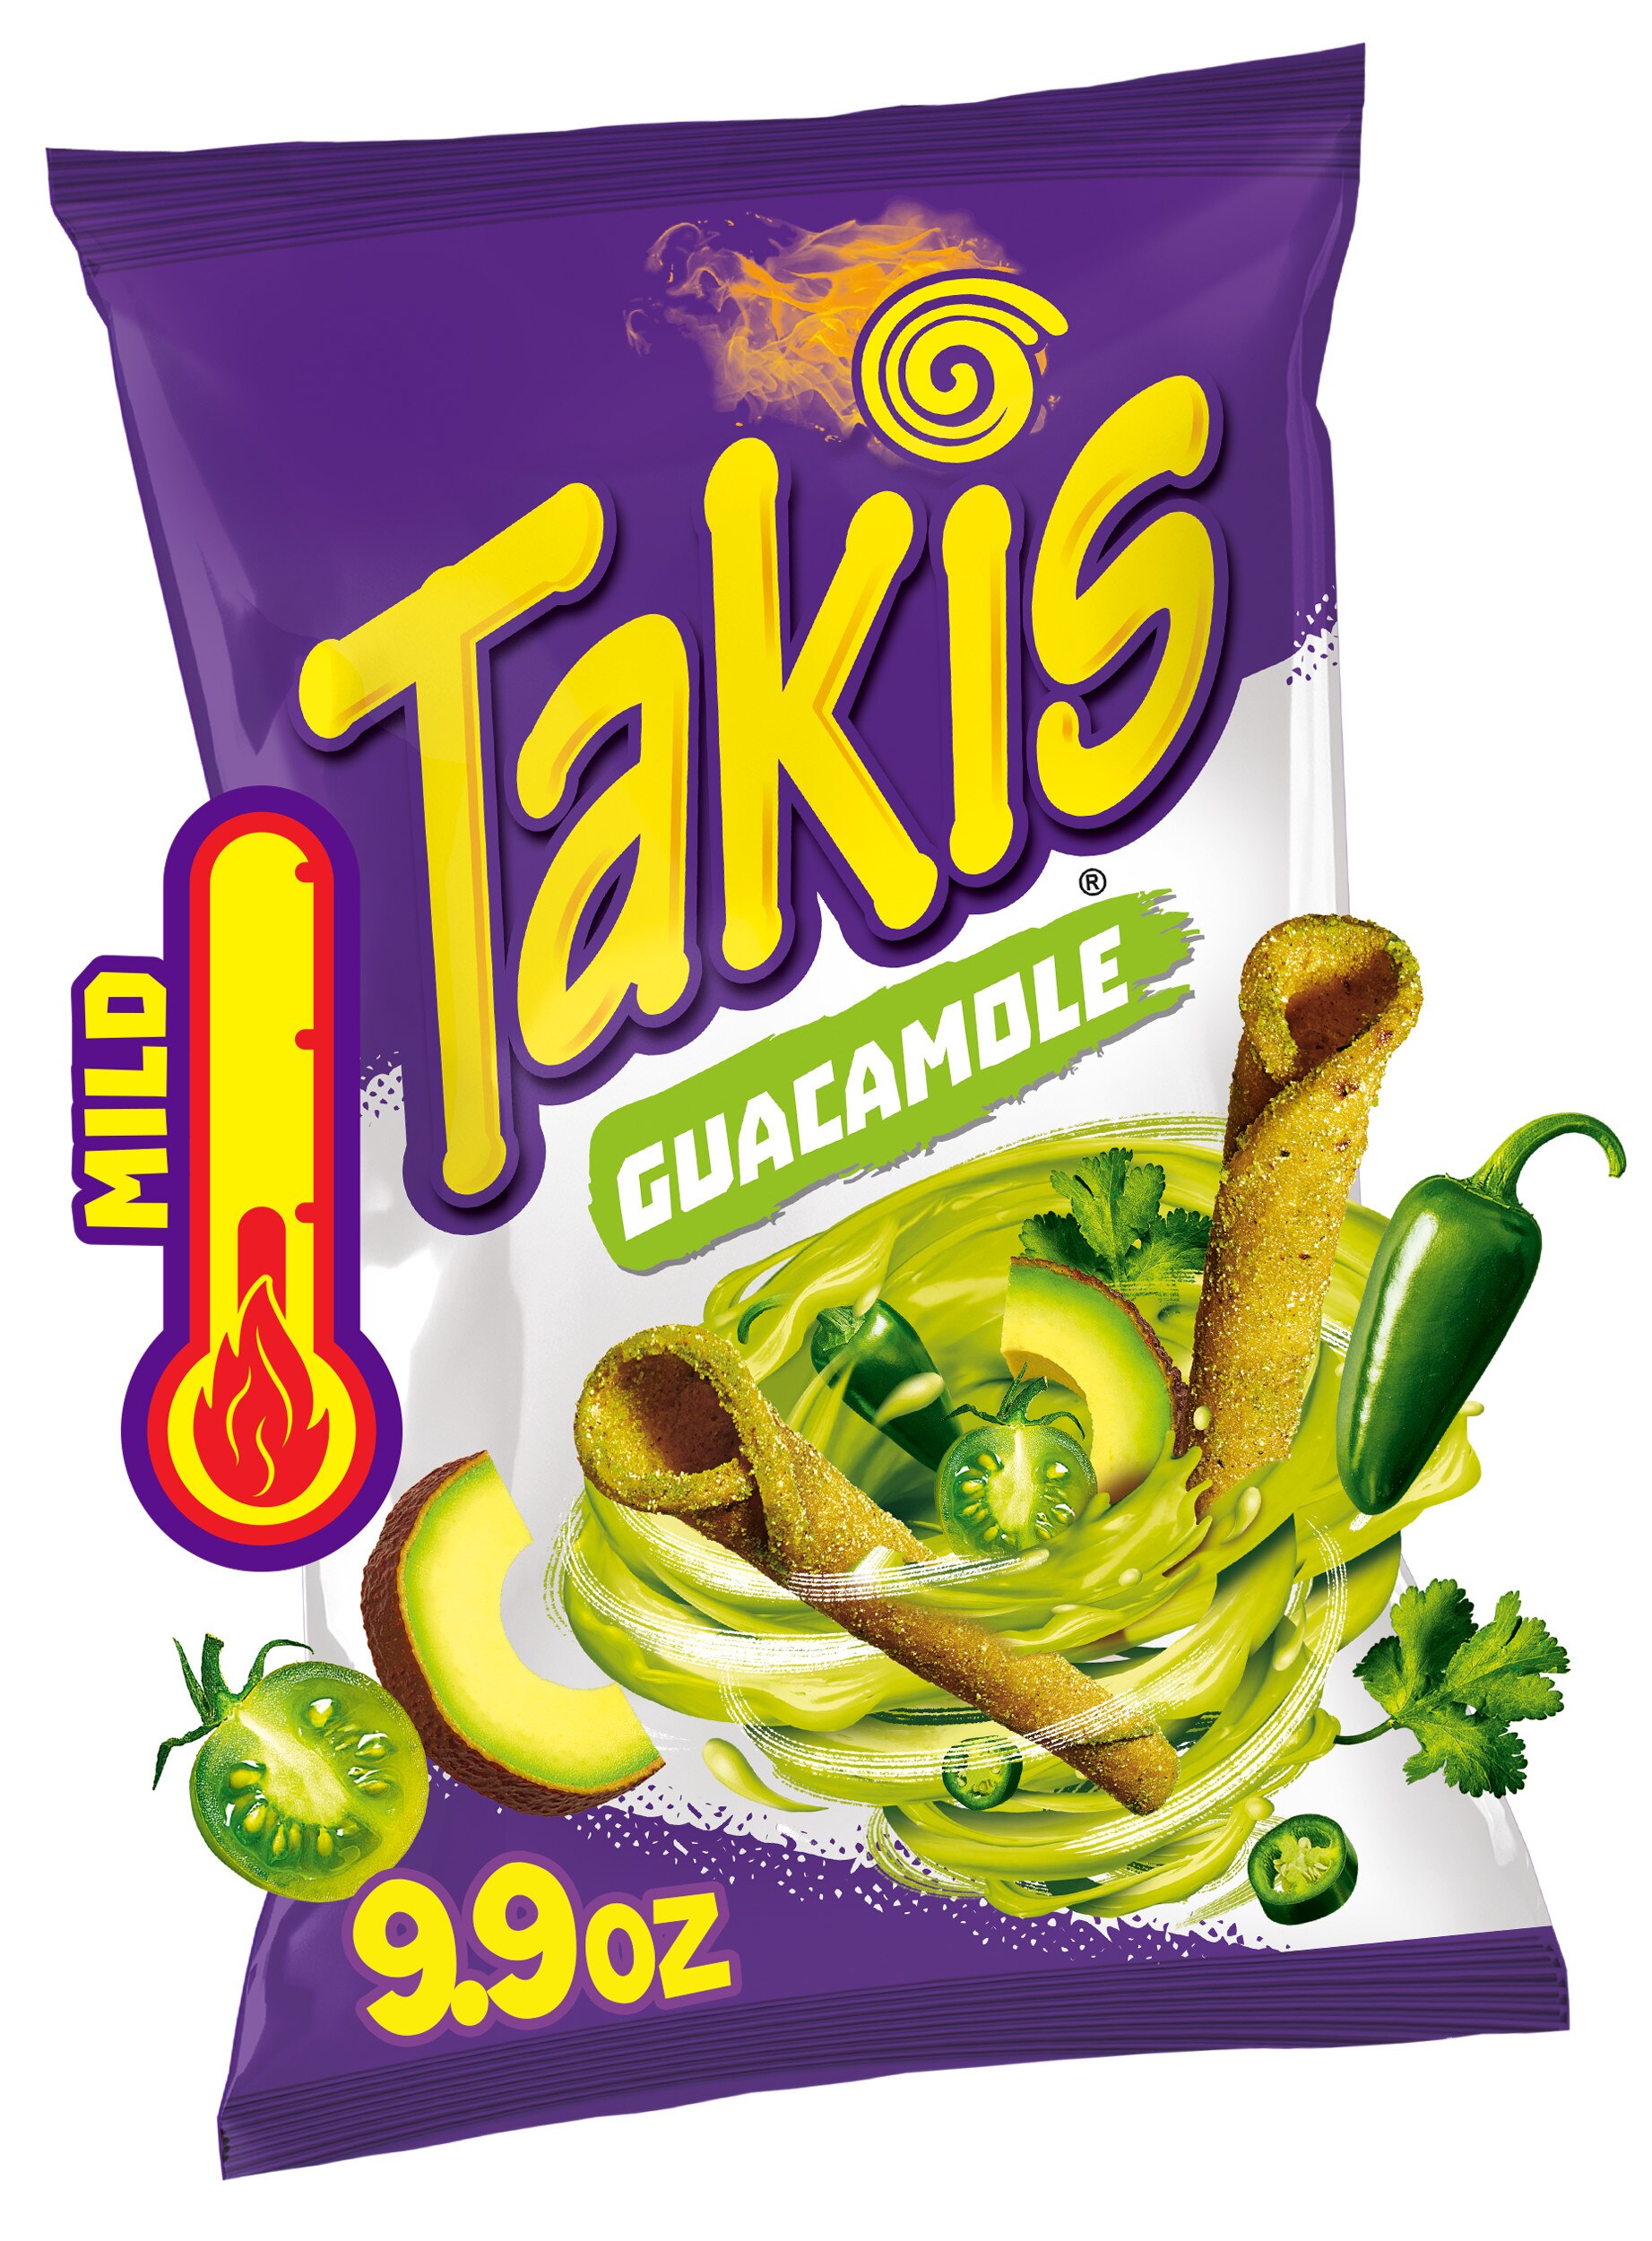 Takis Guacamole Rolled Tortilla Chips, 9.9 Oz , CVS